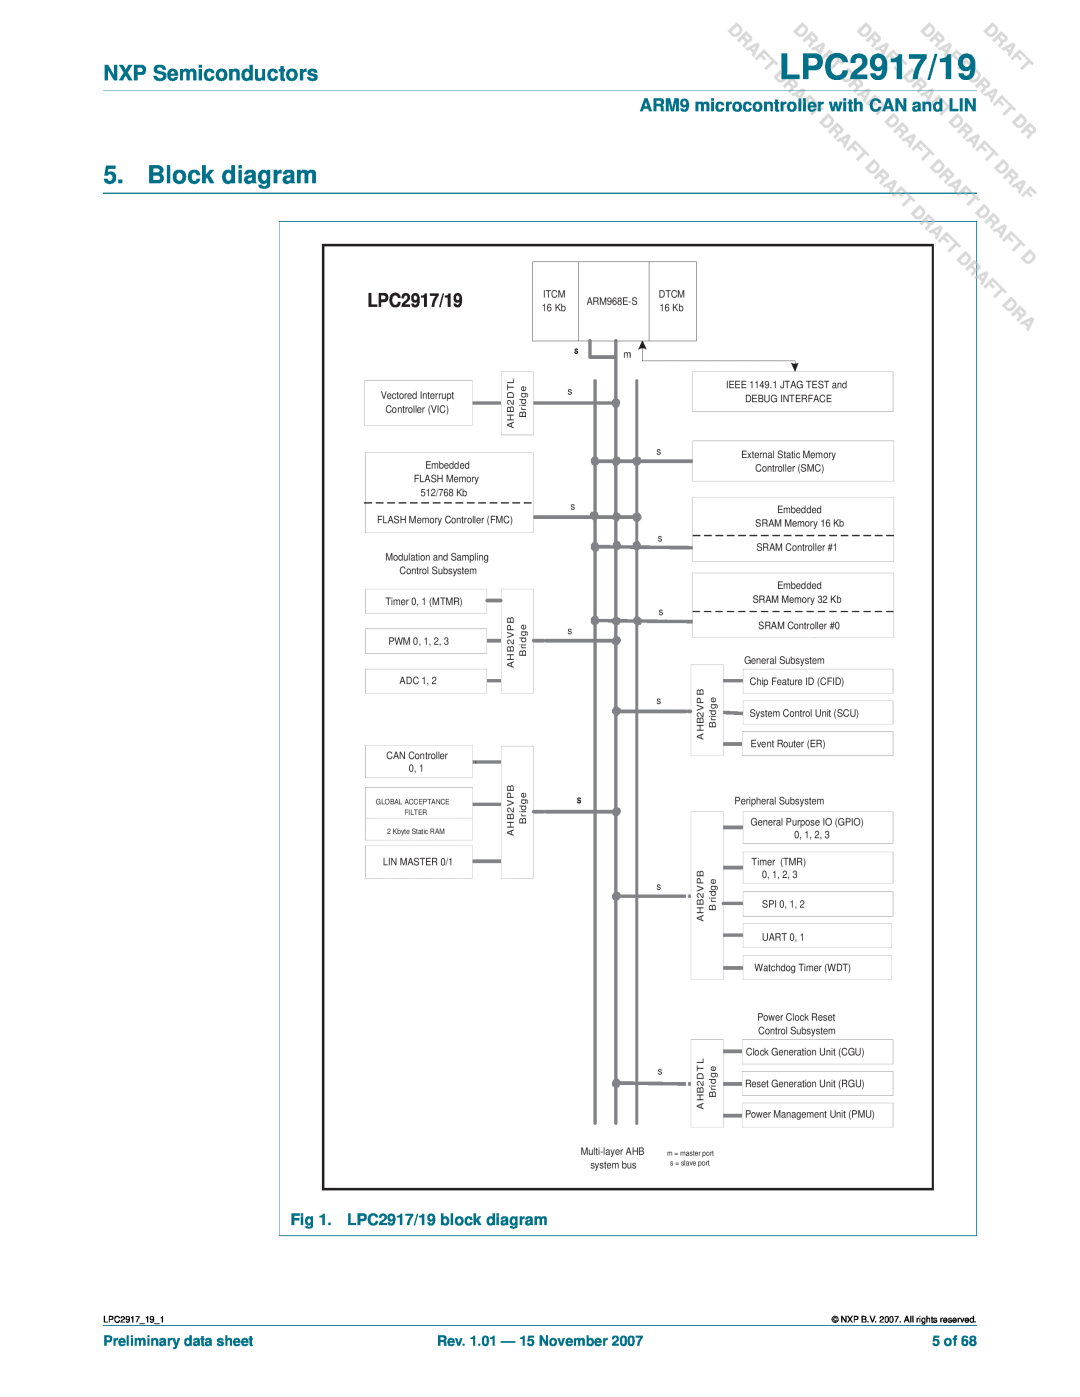 NXP Semiconductors Block diagram, Dra Dr, Draft Draft, DLPC2917/19, Raft Aft, T Draft, NXP Semiconductors, 5 of 